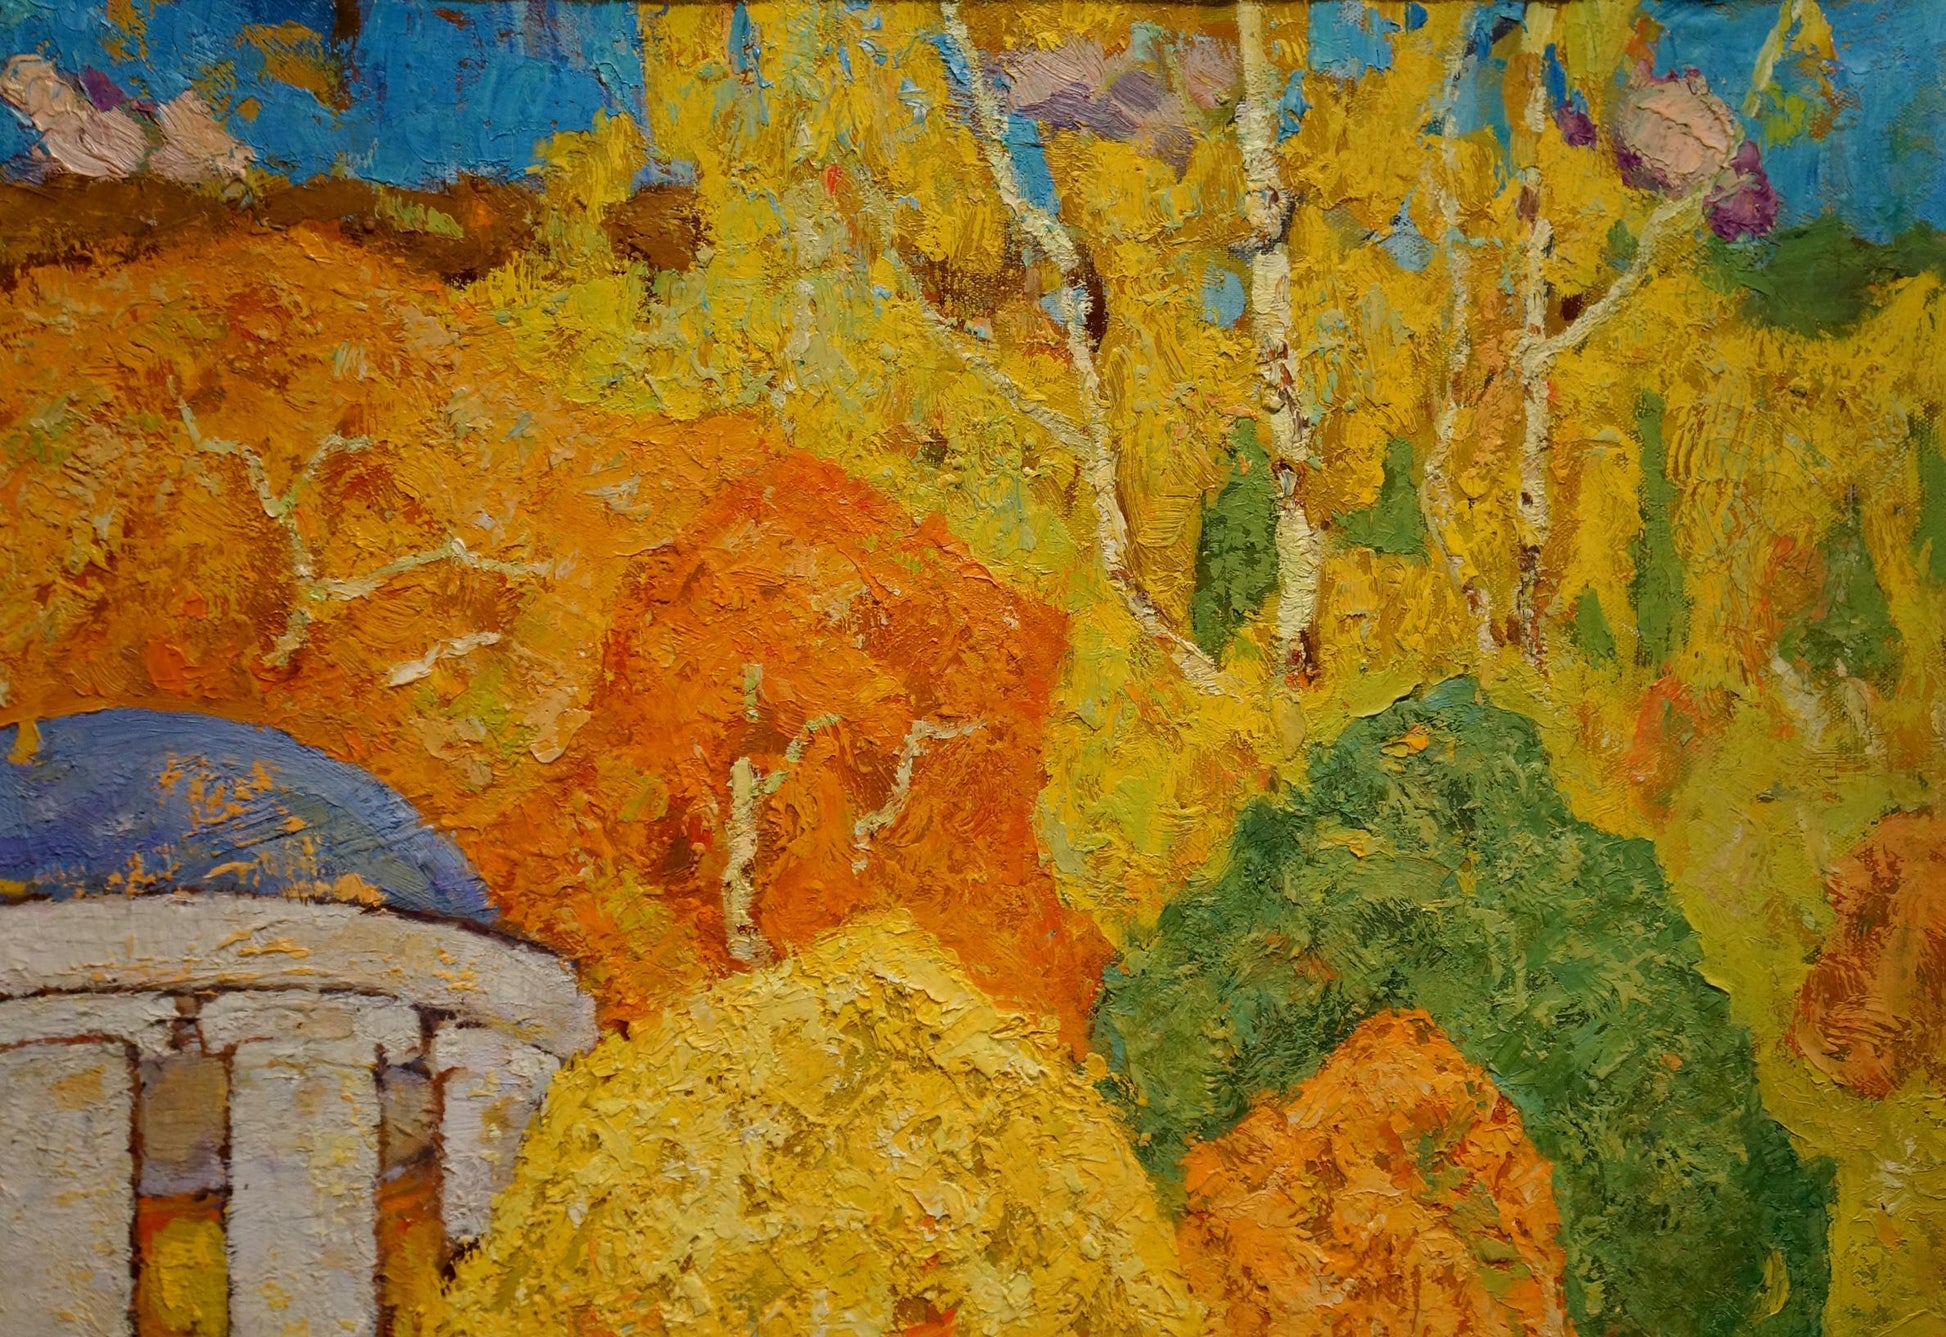 Evgeny Vasilievich Chuykov's oil painting capturing an "Autumn Landscape"